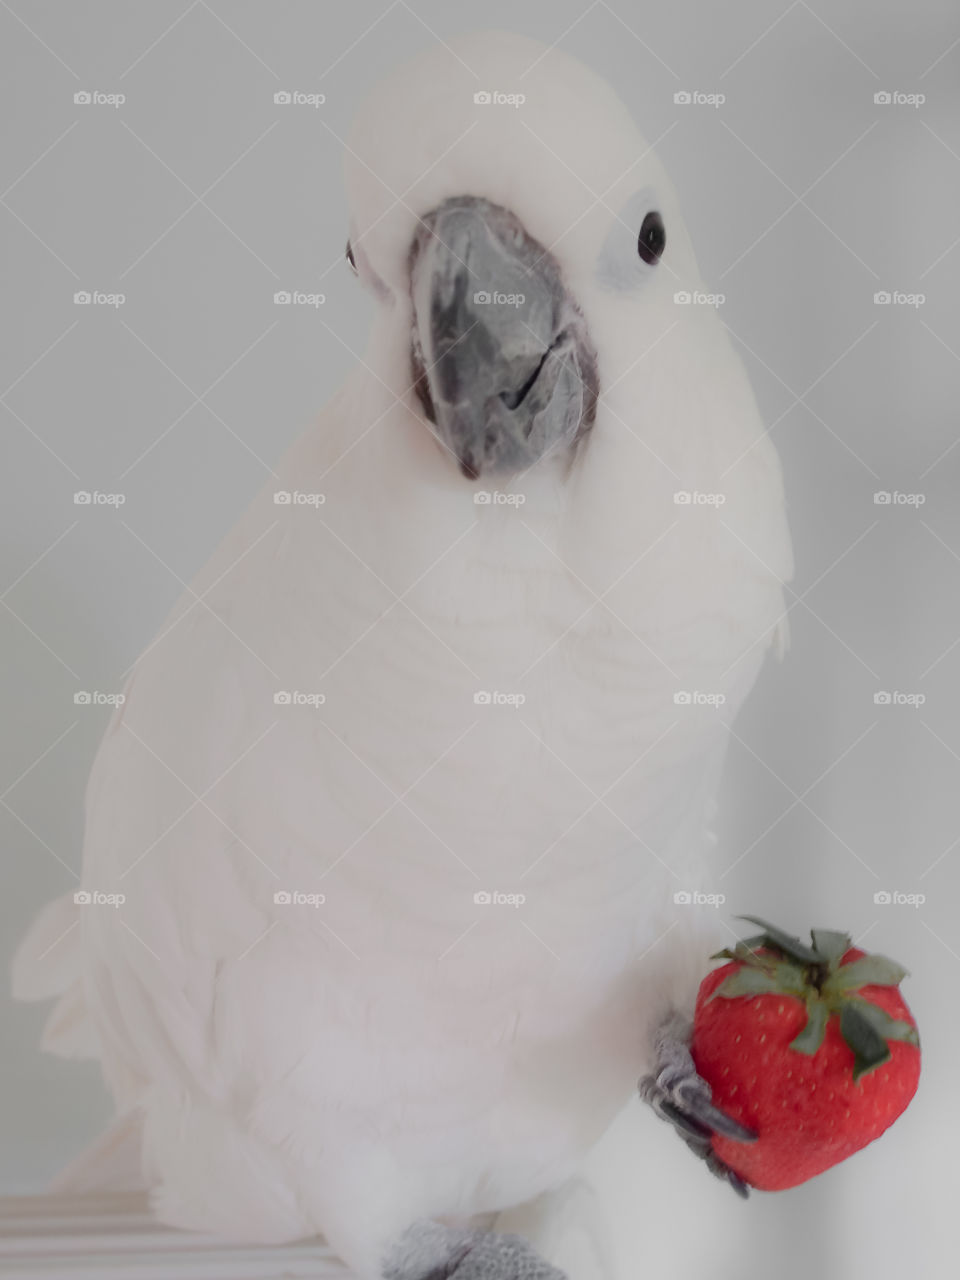 Cockatoo holding a strawberry